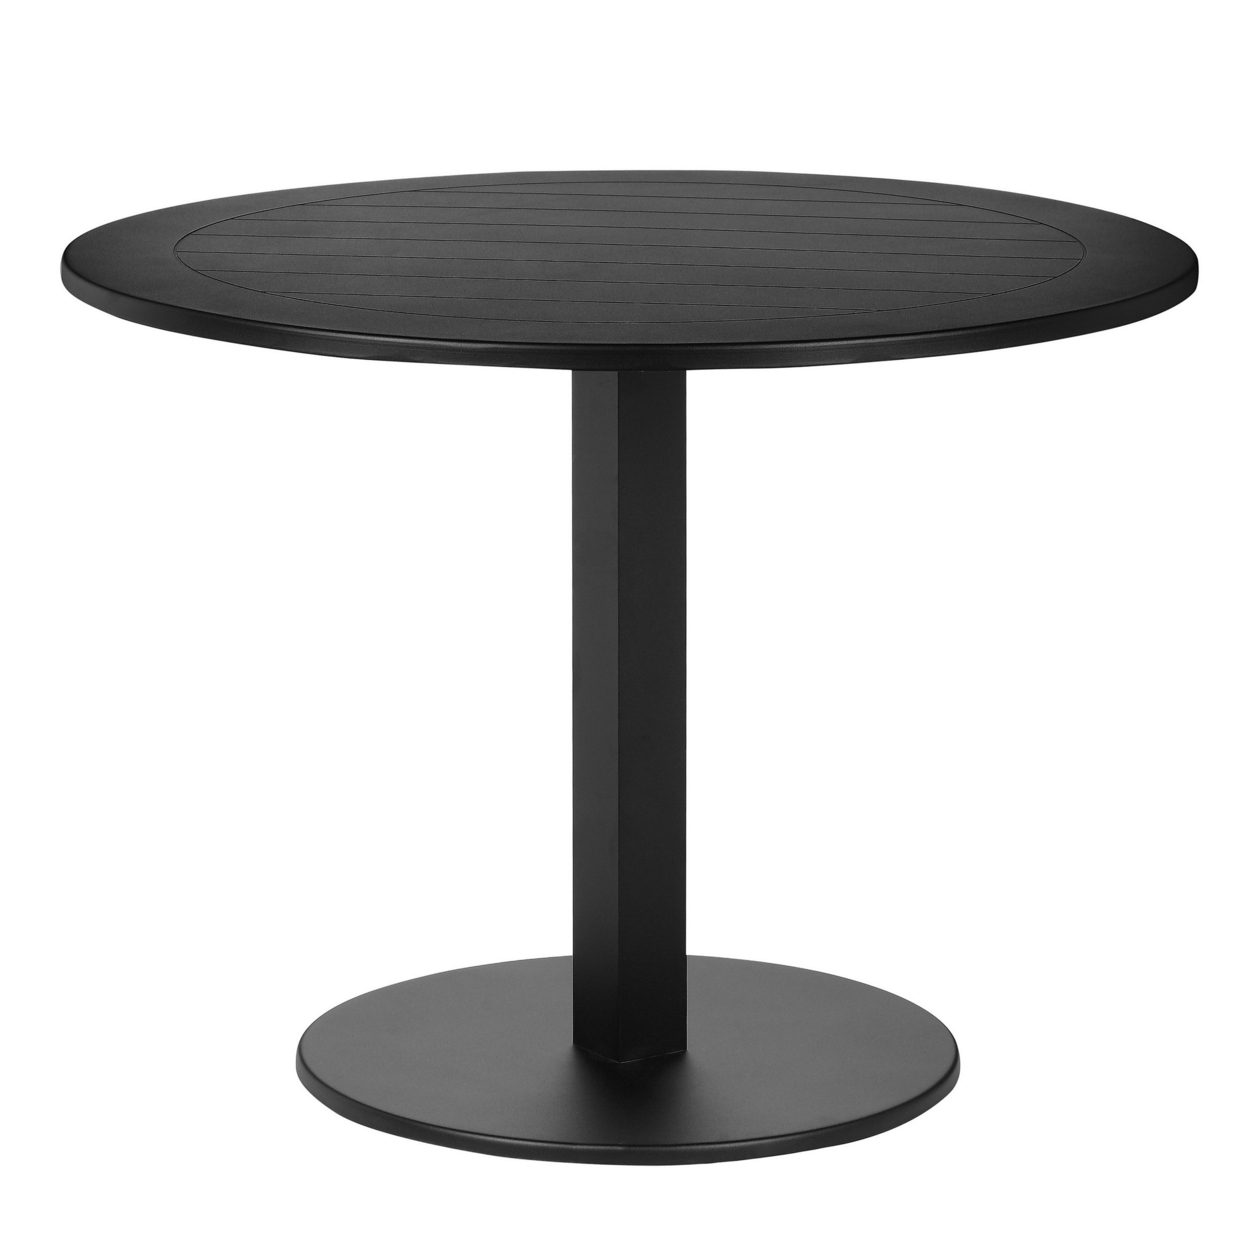 Keli 35 Inch Round Dining Table, Black Aluminum Frame, Foldable Design- Saltoro Sherpi